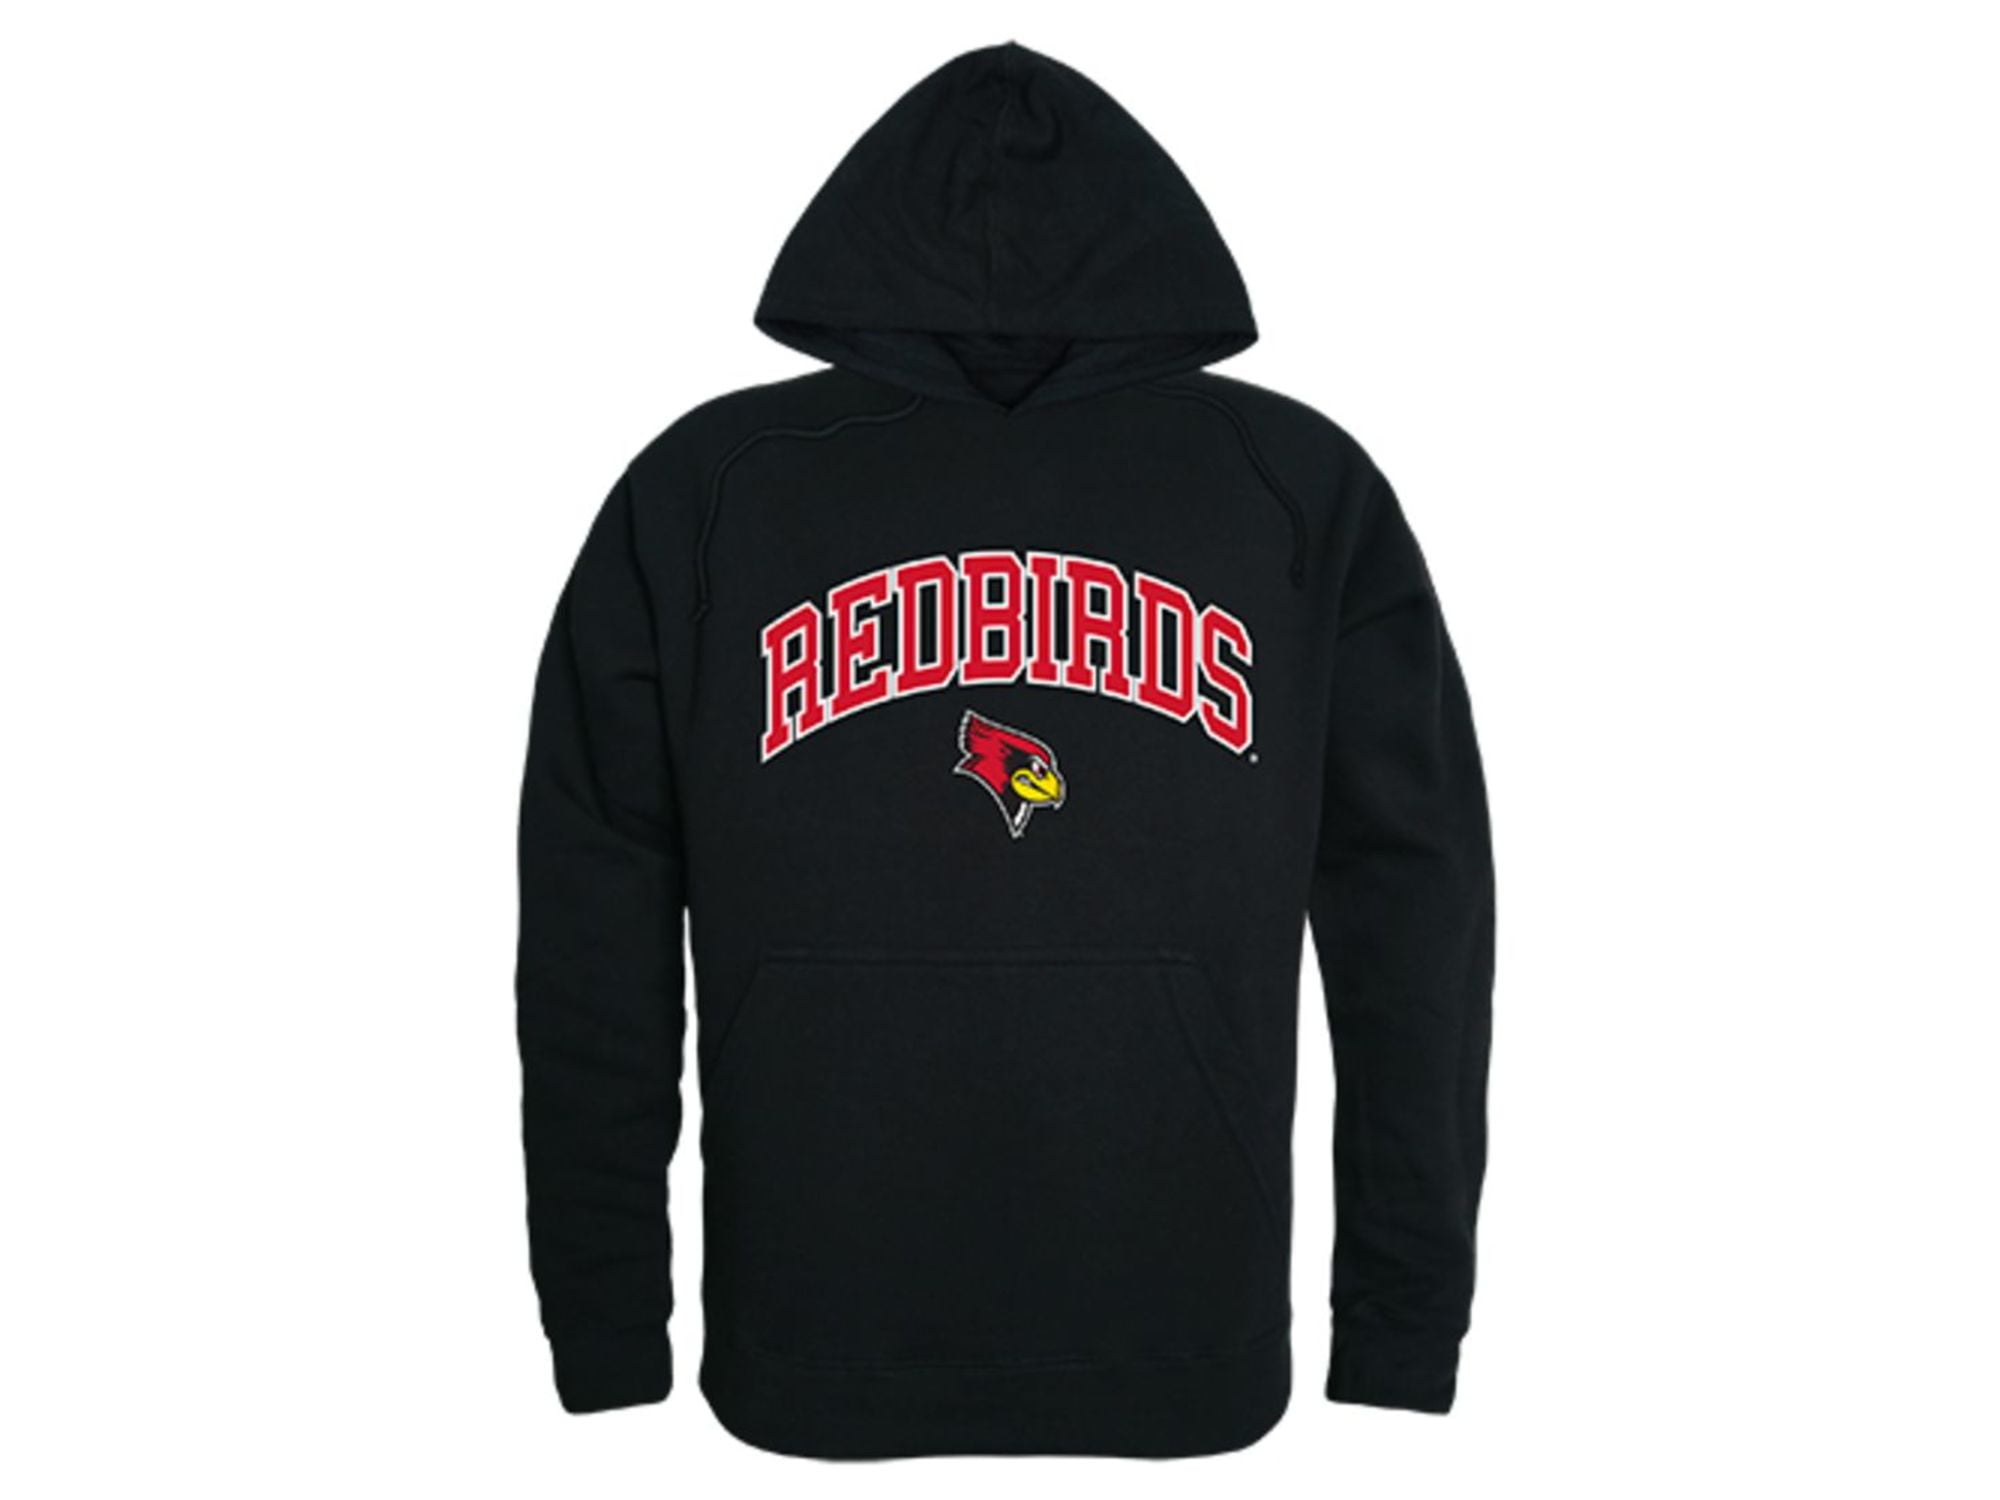 Illinois State University Redbirds Campus Hoodie Sweatshirt Black